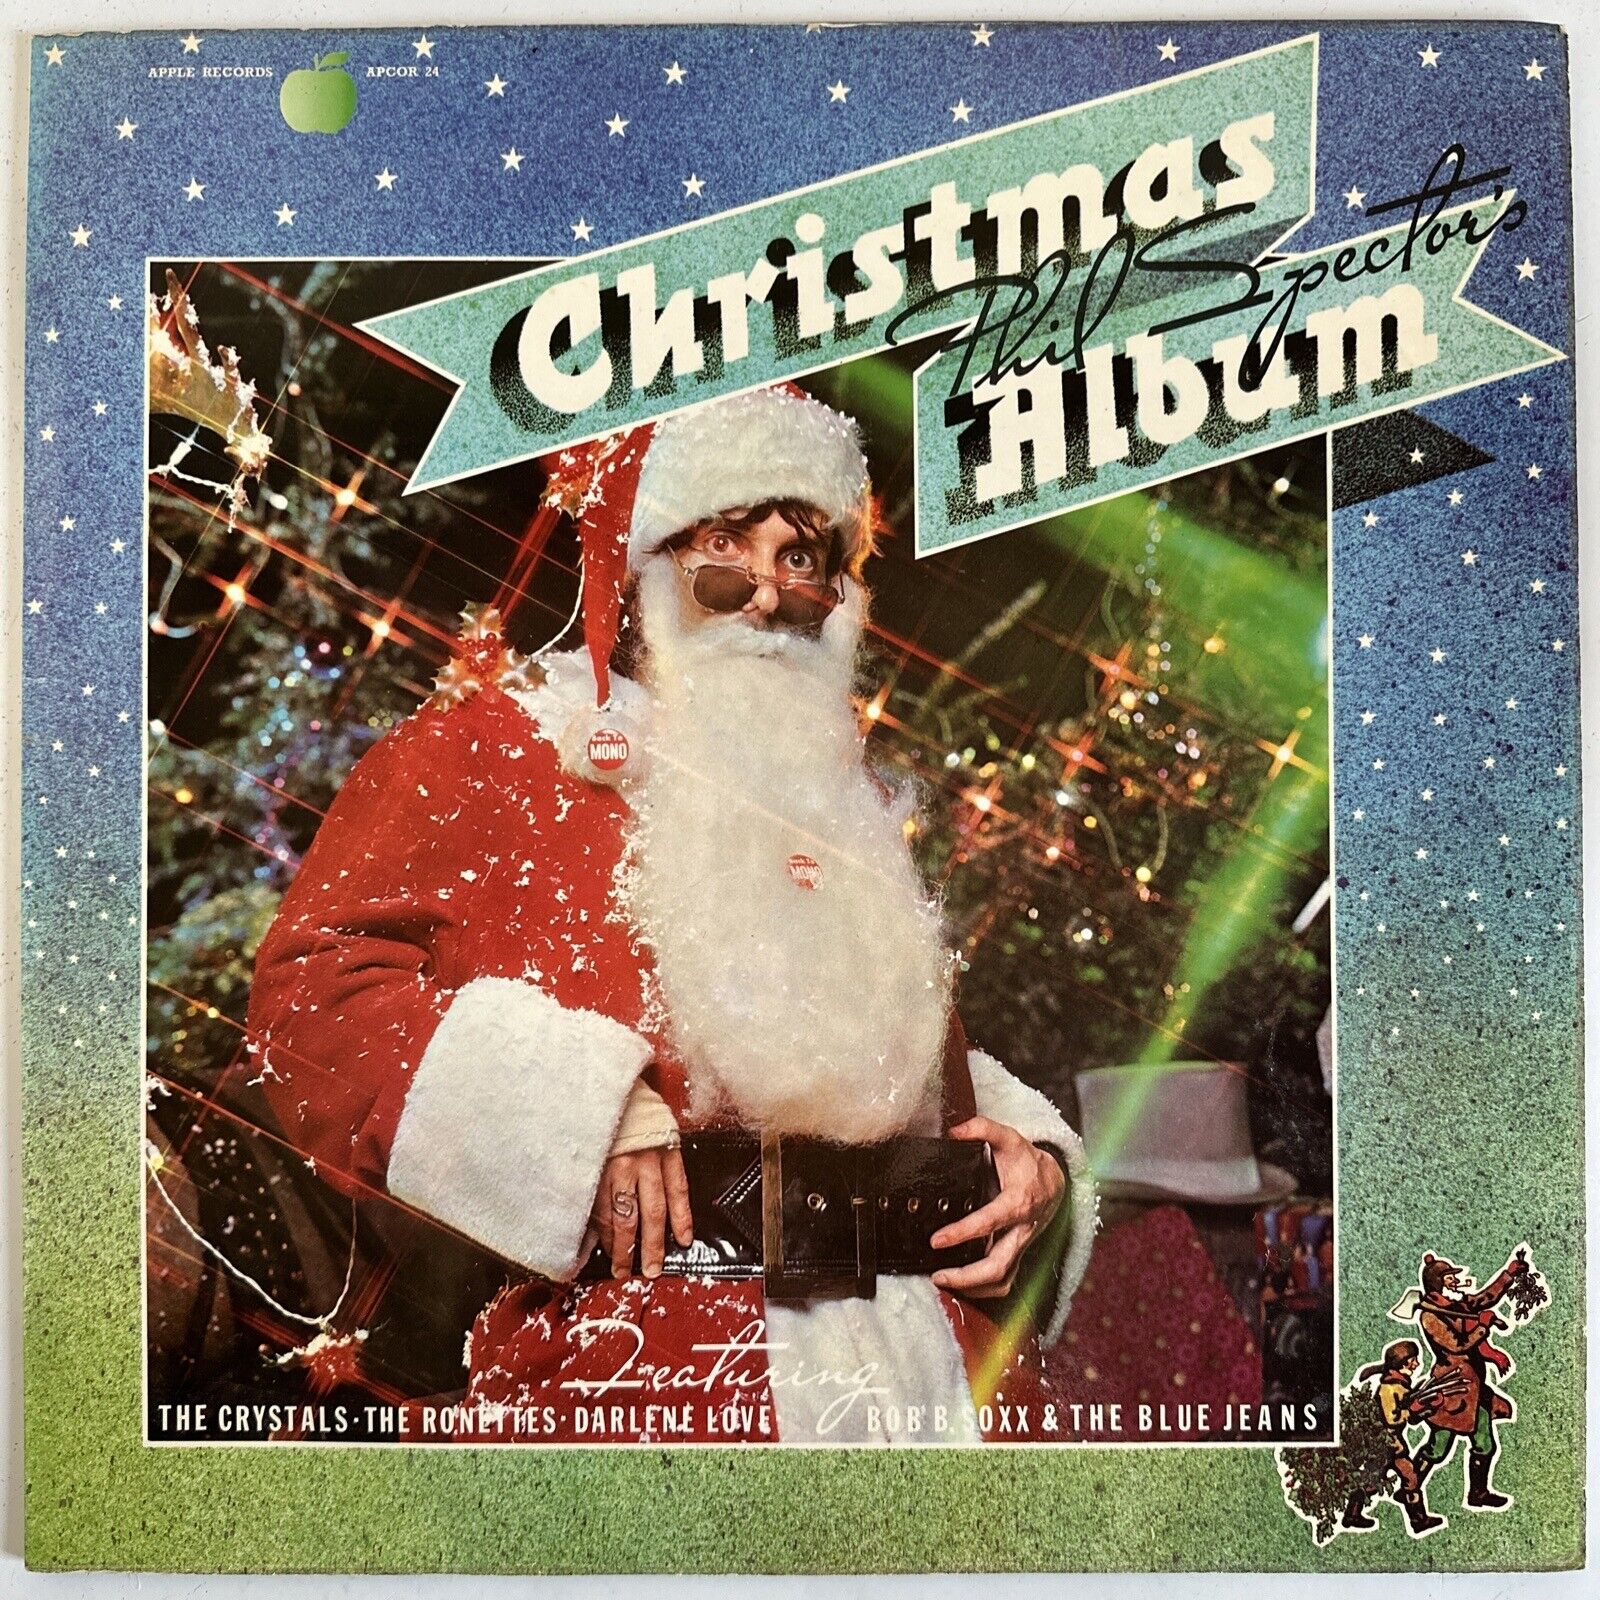 PHIL SPECTOR’S CHRISTMAS ALBUM VINYL LP APPLE APCOR 24 1972 EX/EX PRO CLEANED